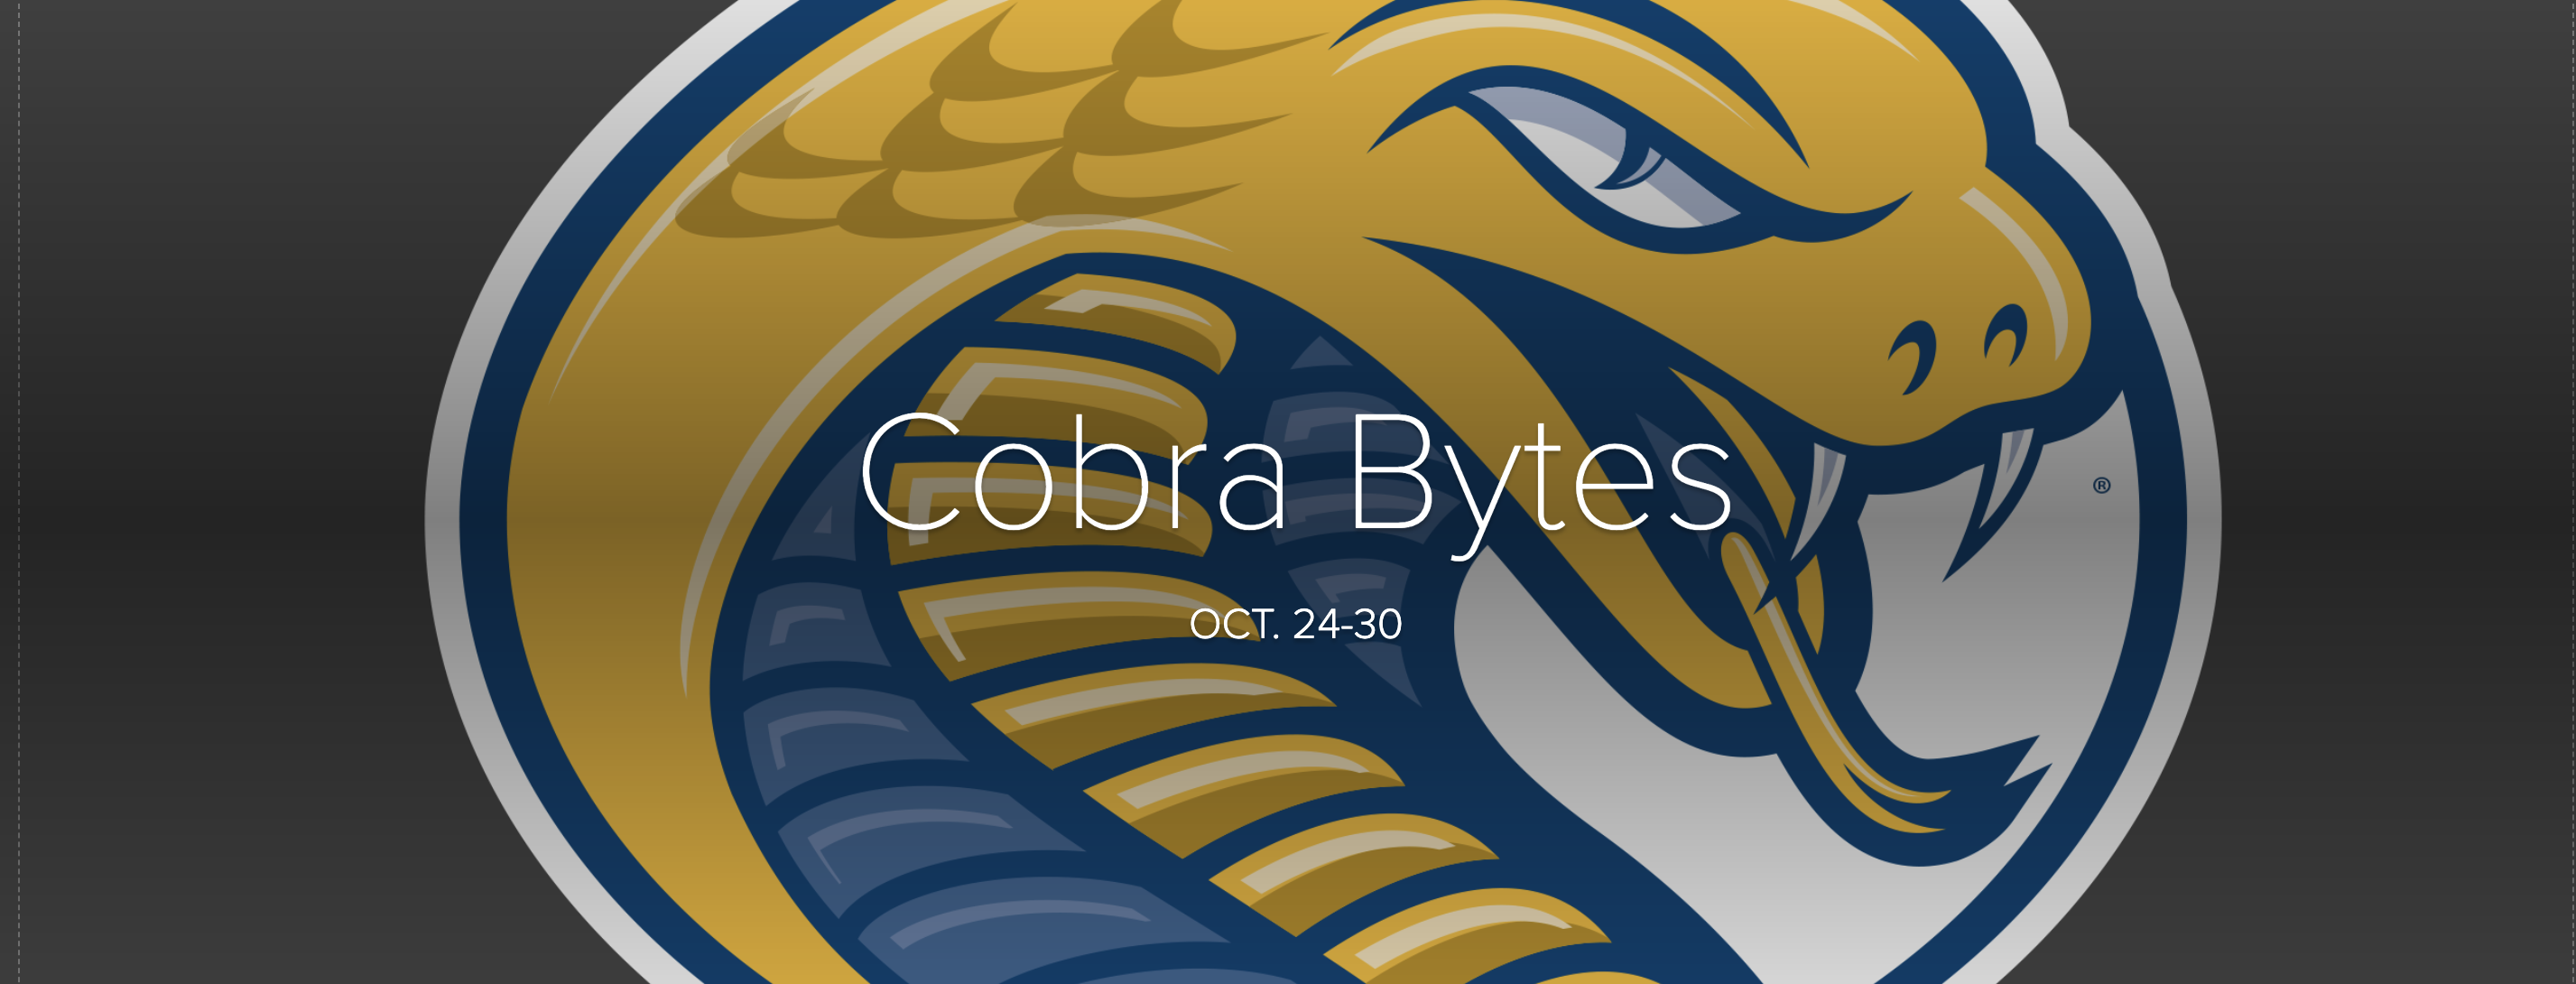 Cobra Bytes Oct. 24-30